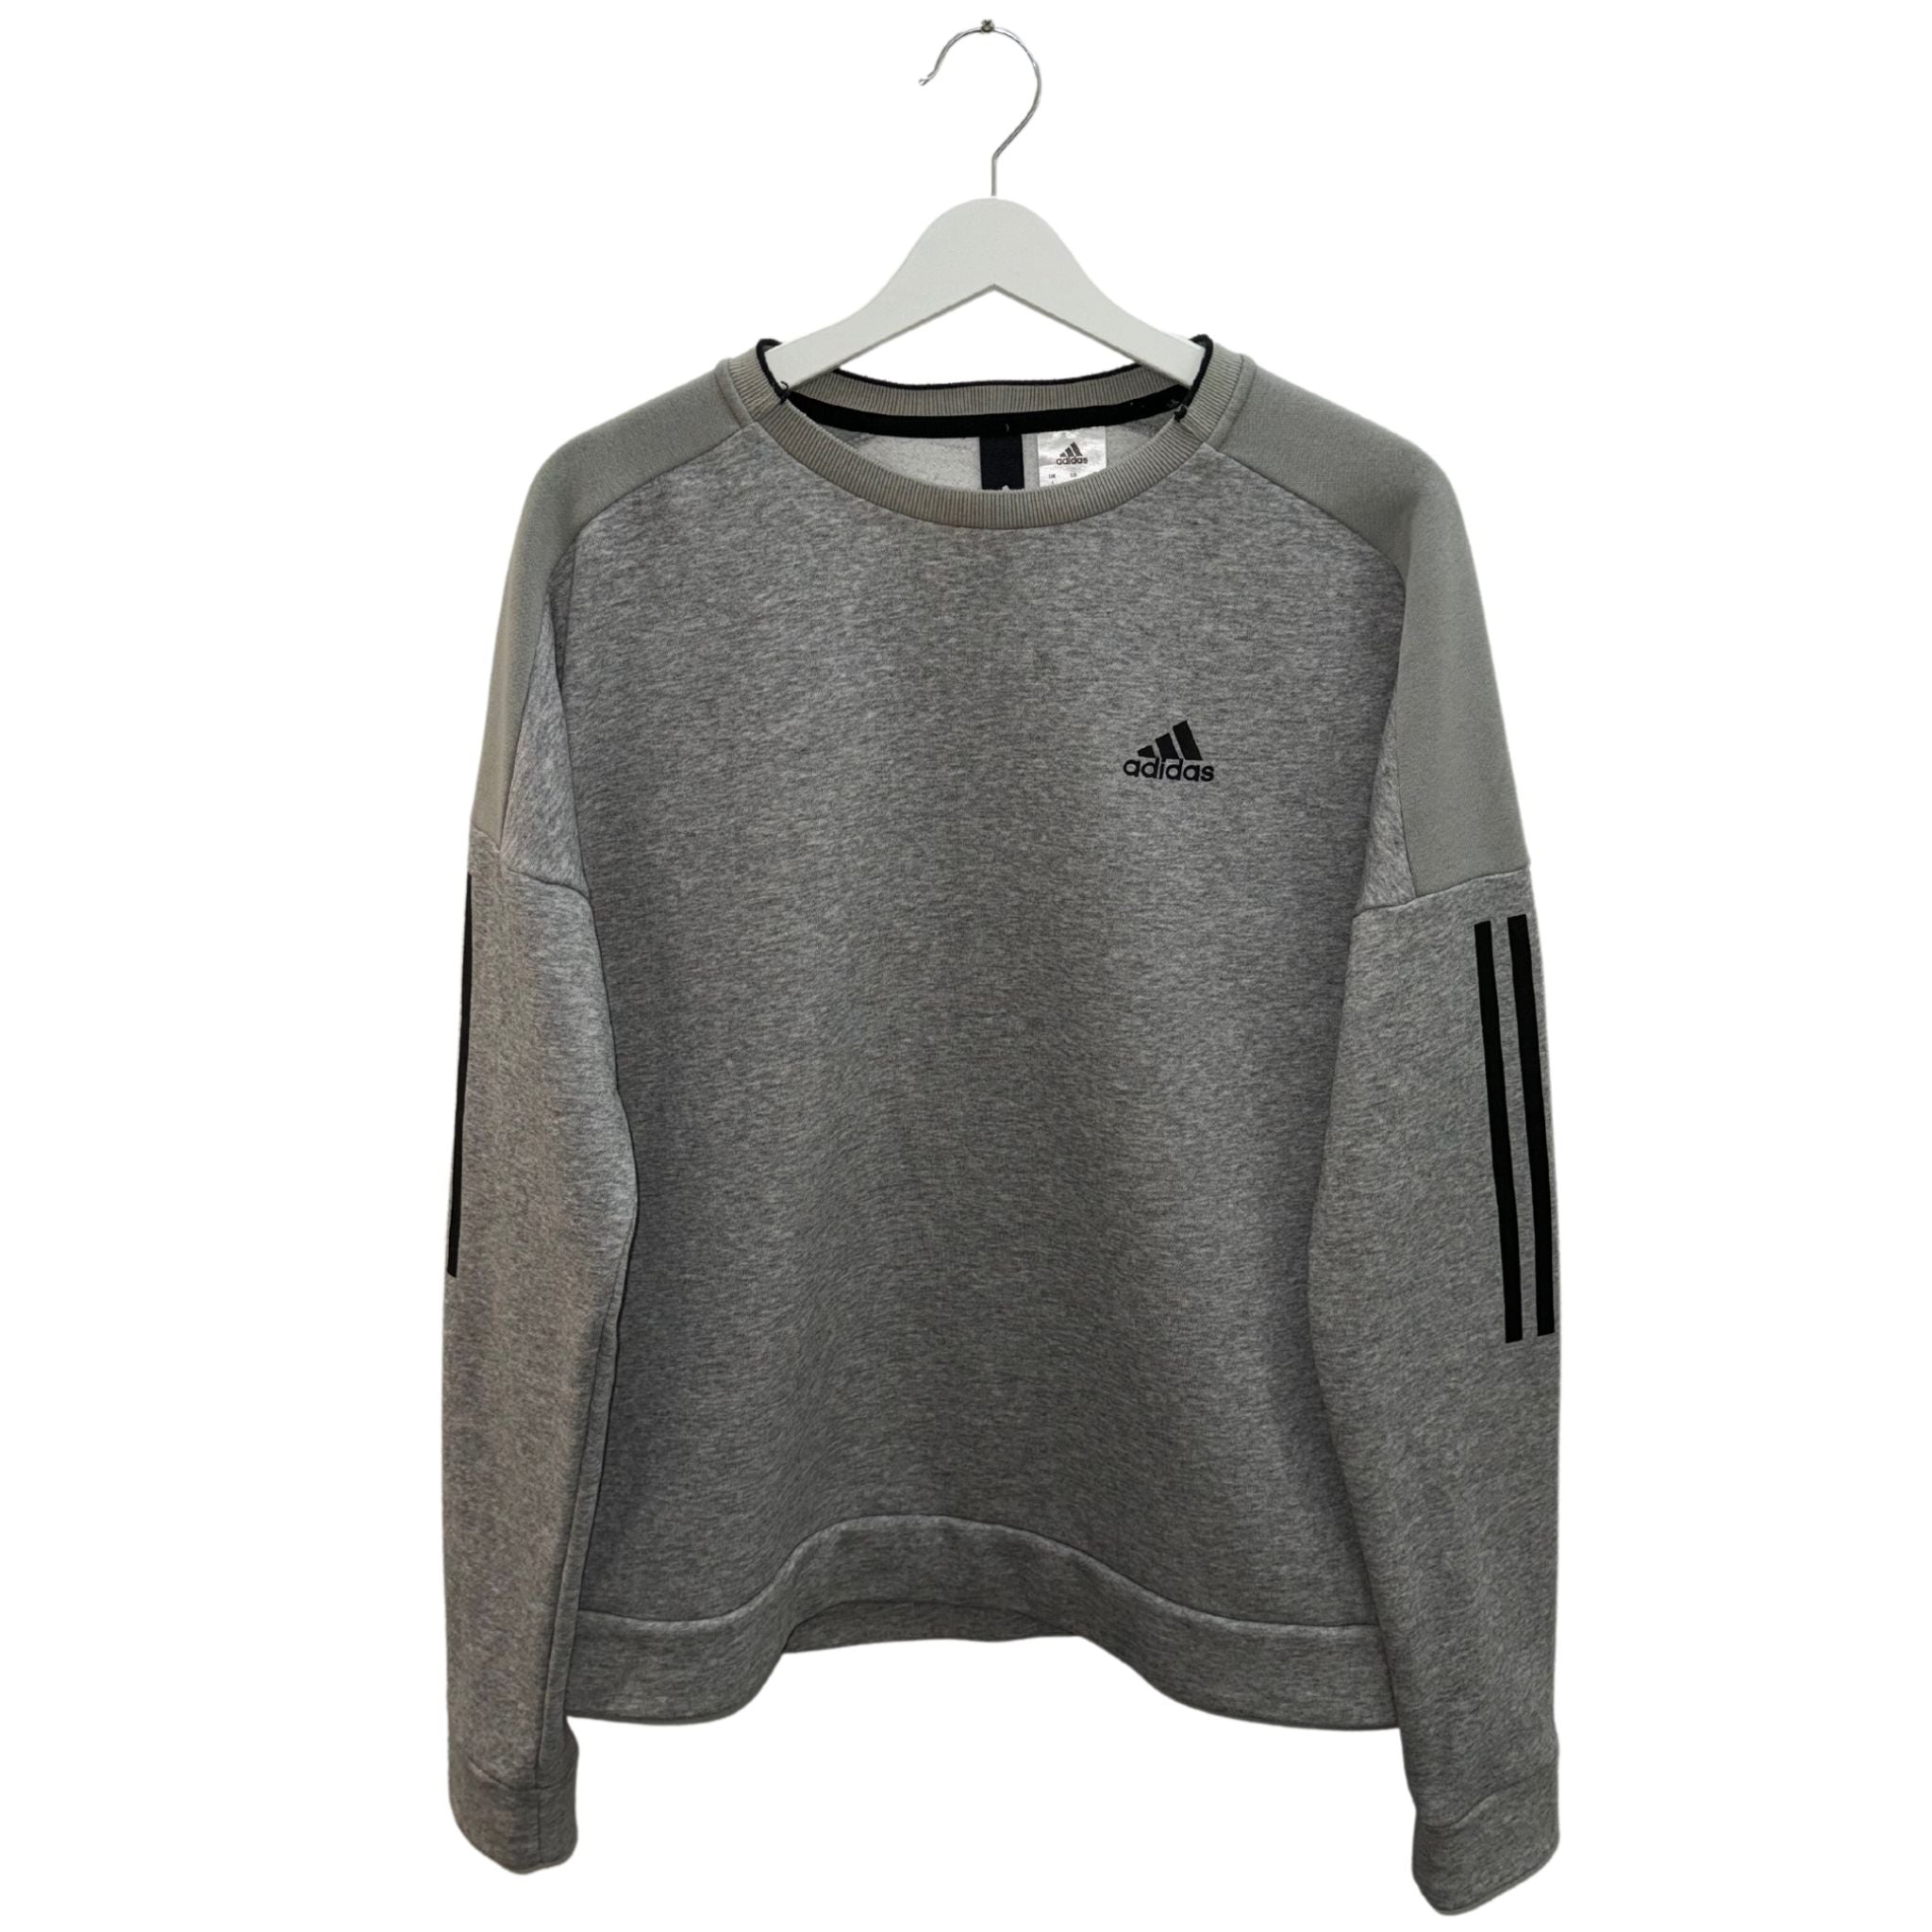 Adidas Sweater Grau S